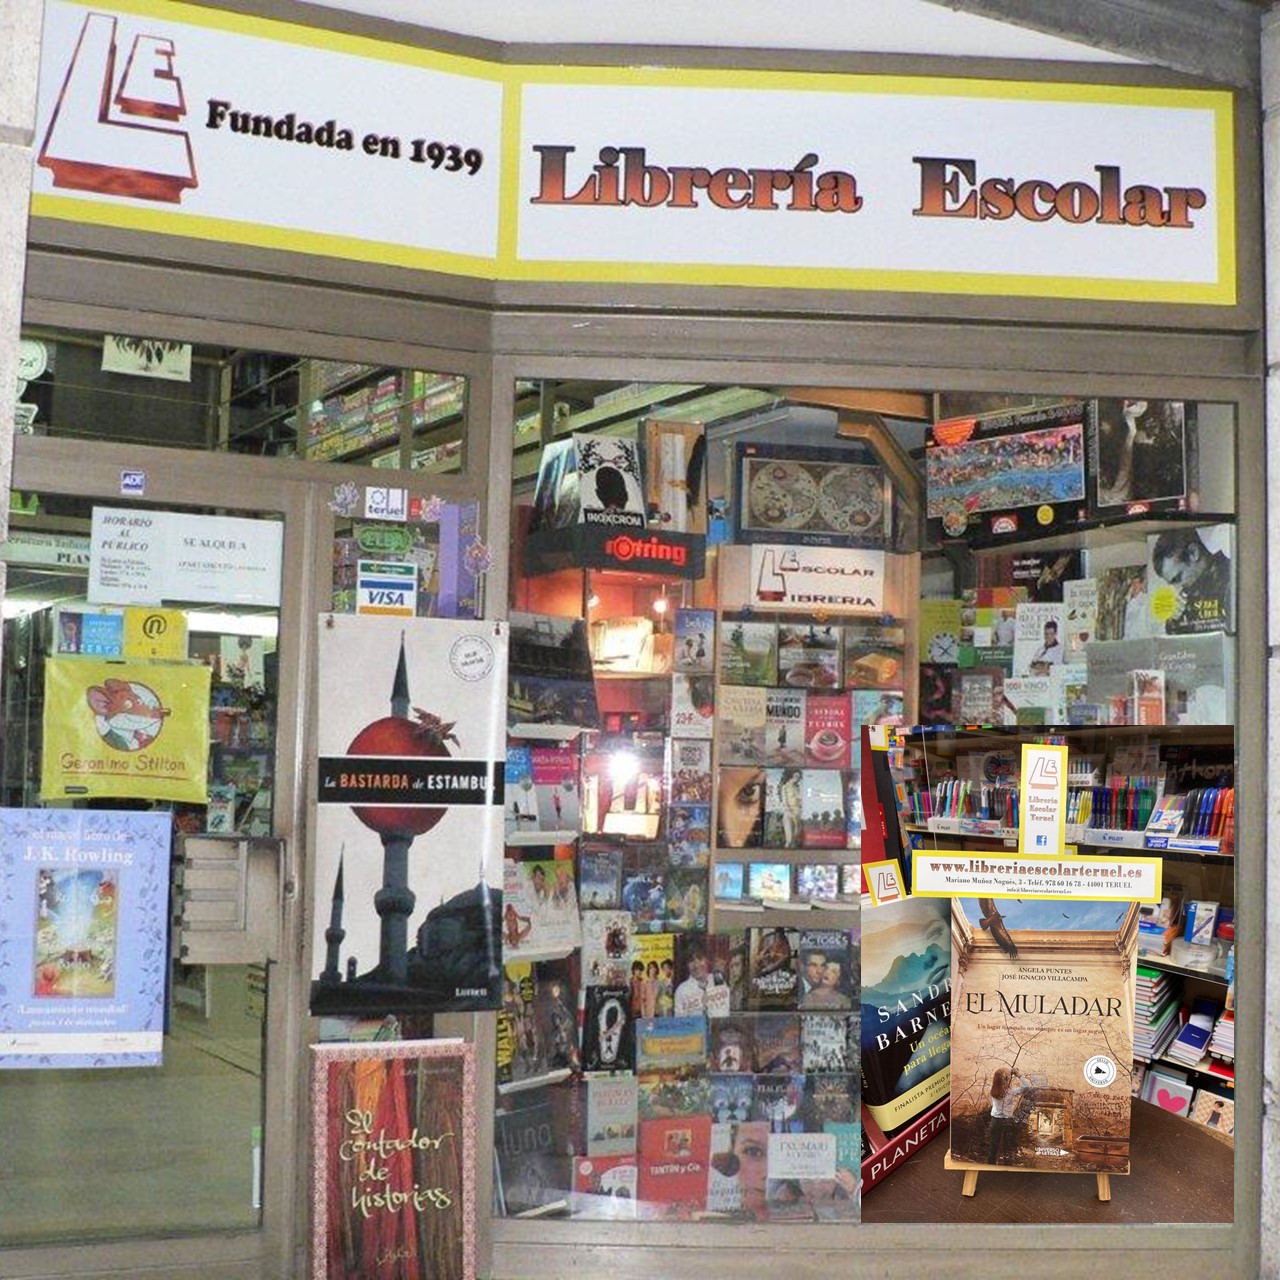 Libreria Escolar Teruel